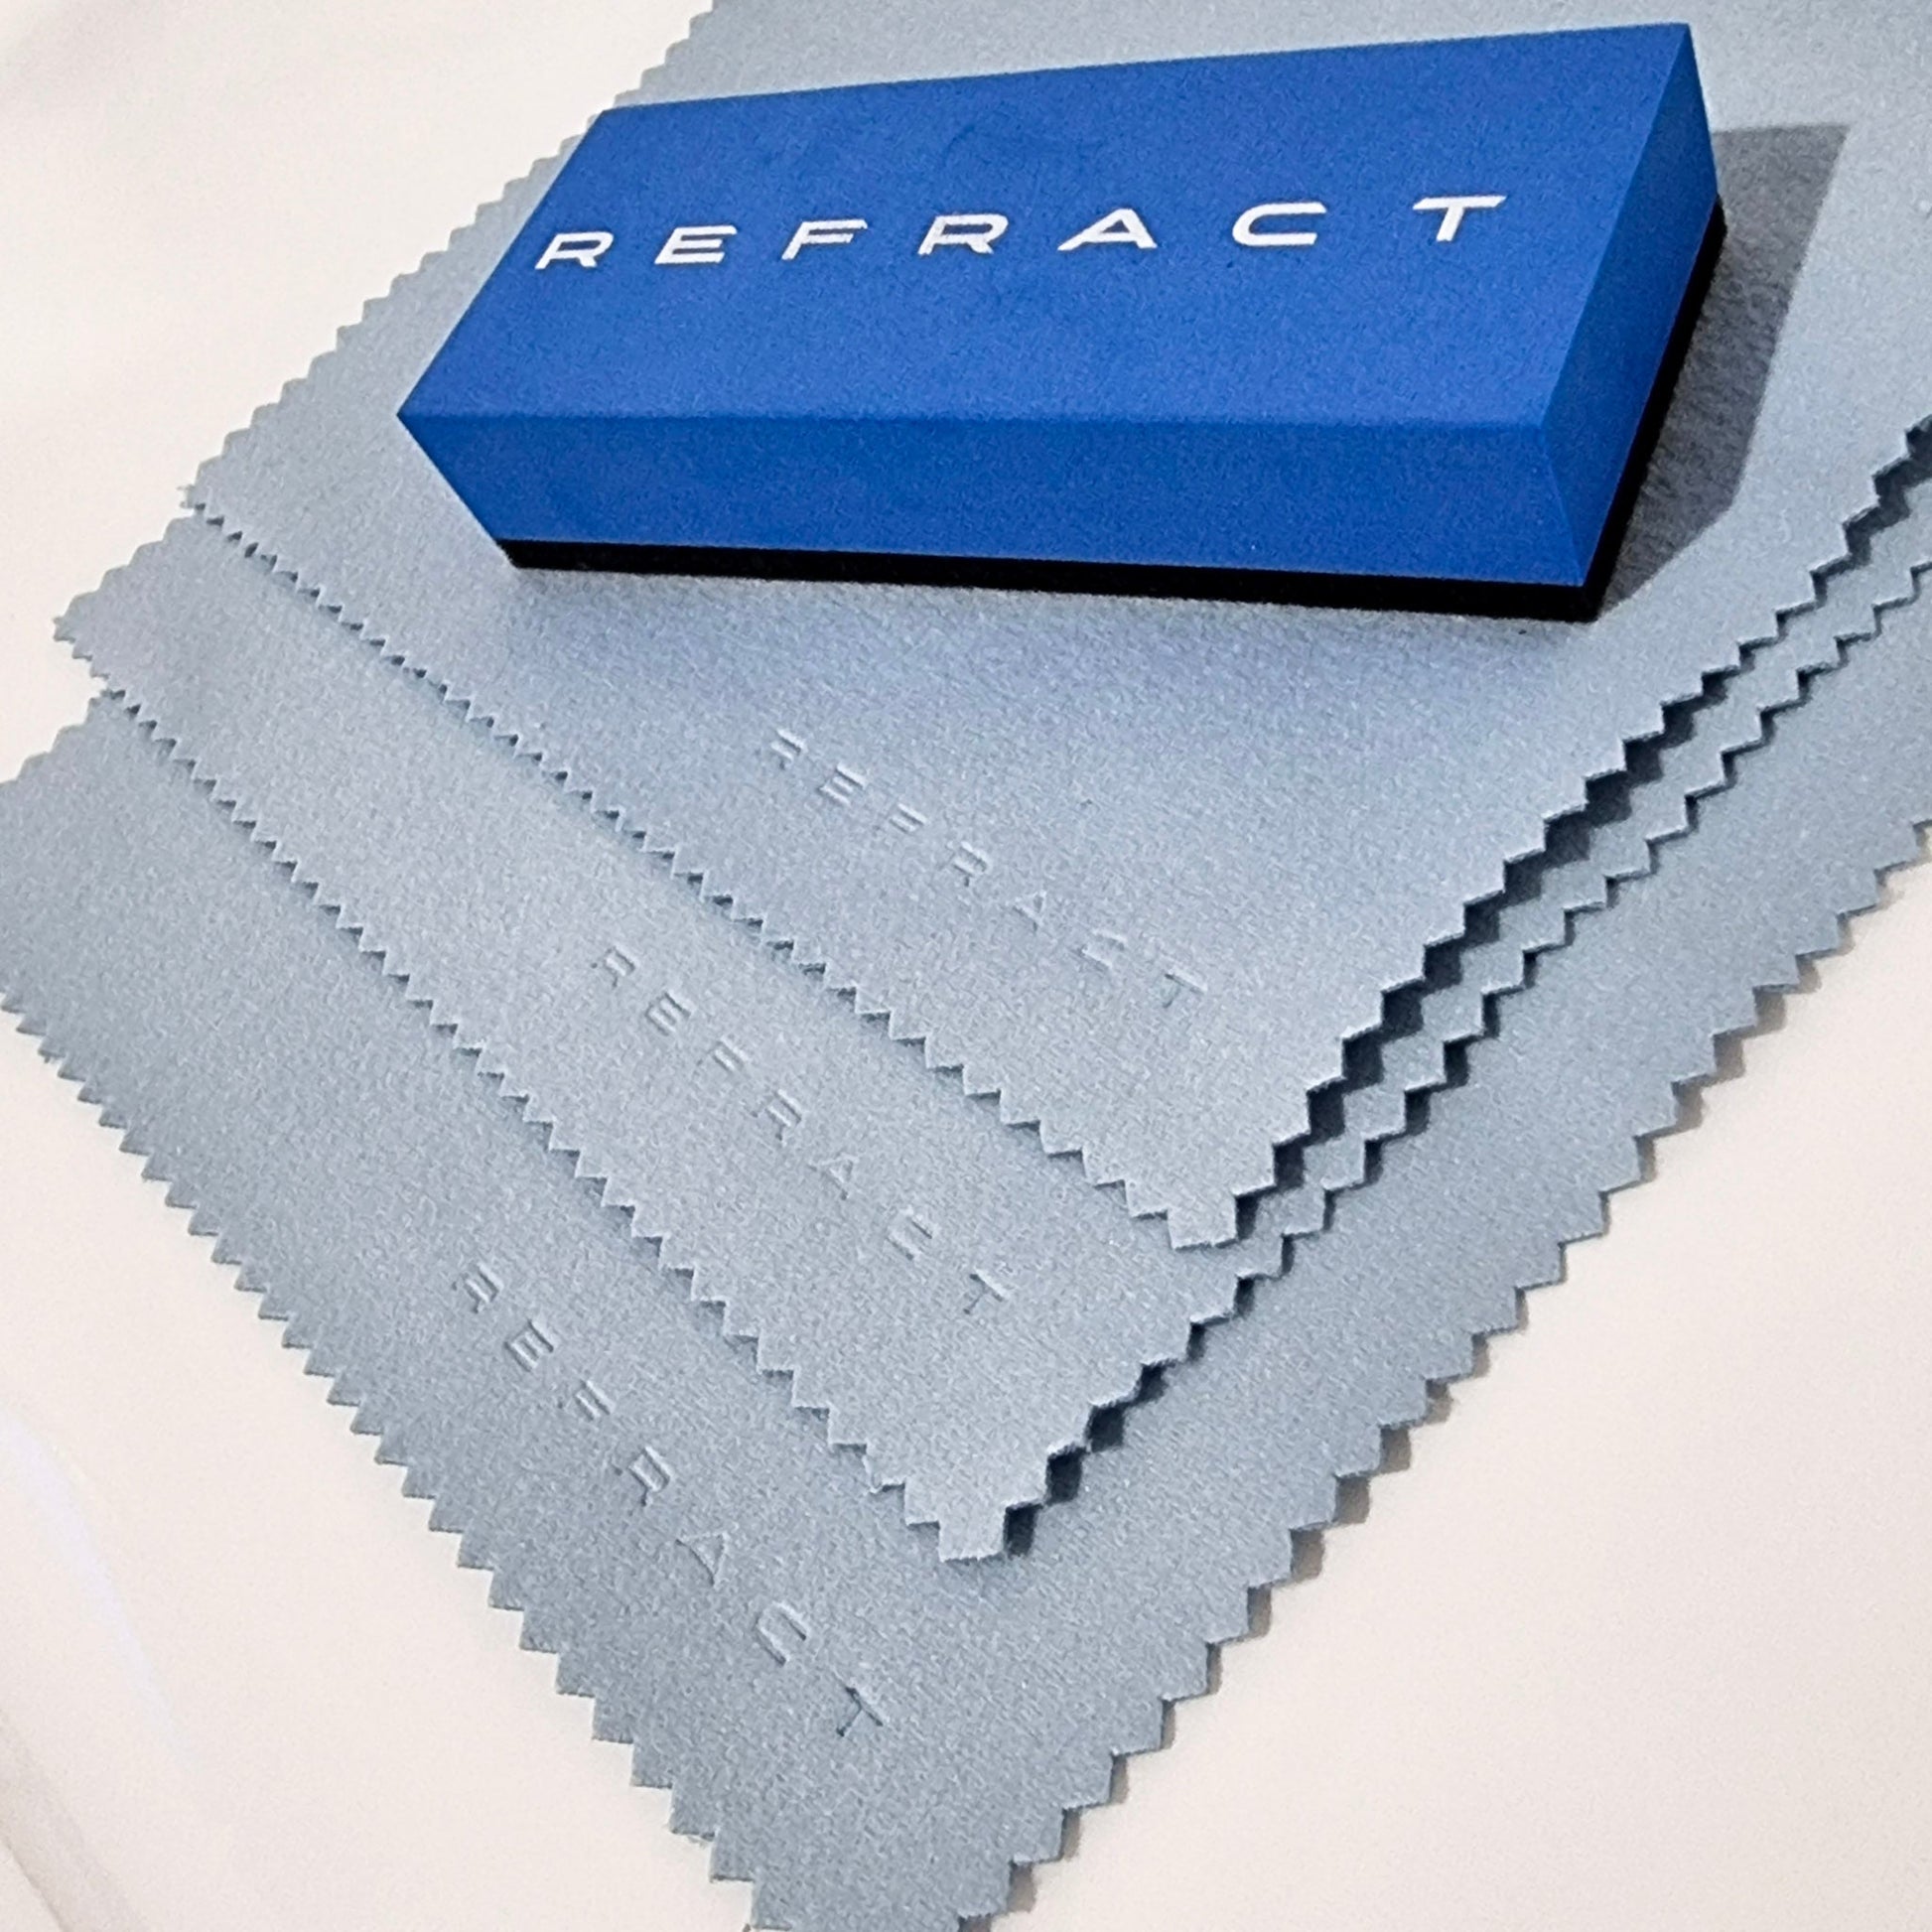 Refract Premium Car Care Products REFRACT Suede Microfiber Towel Ceramic Coating Applicator kit $12.95